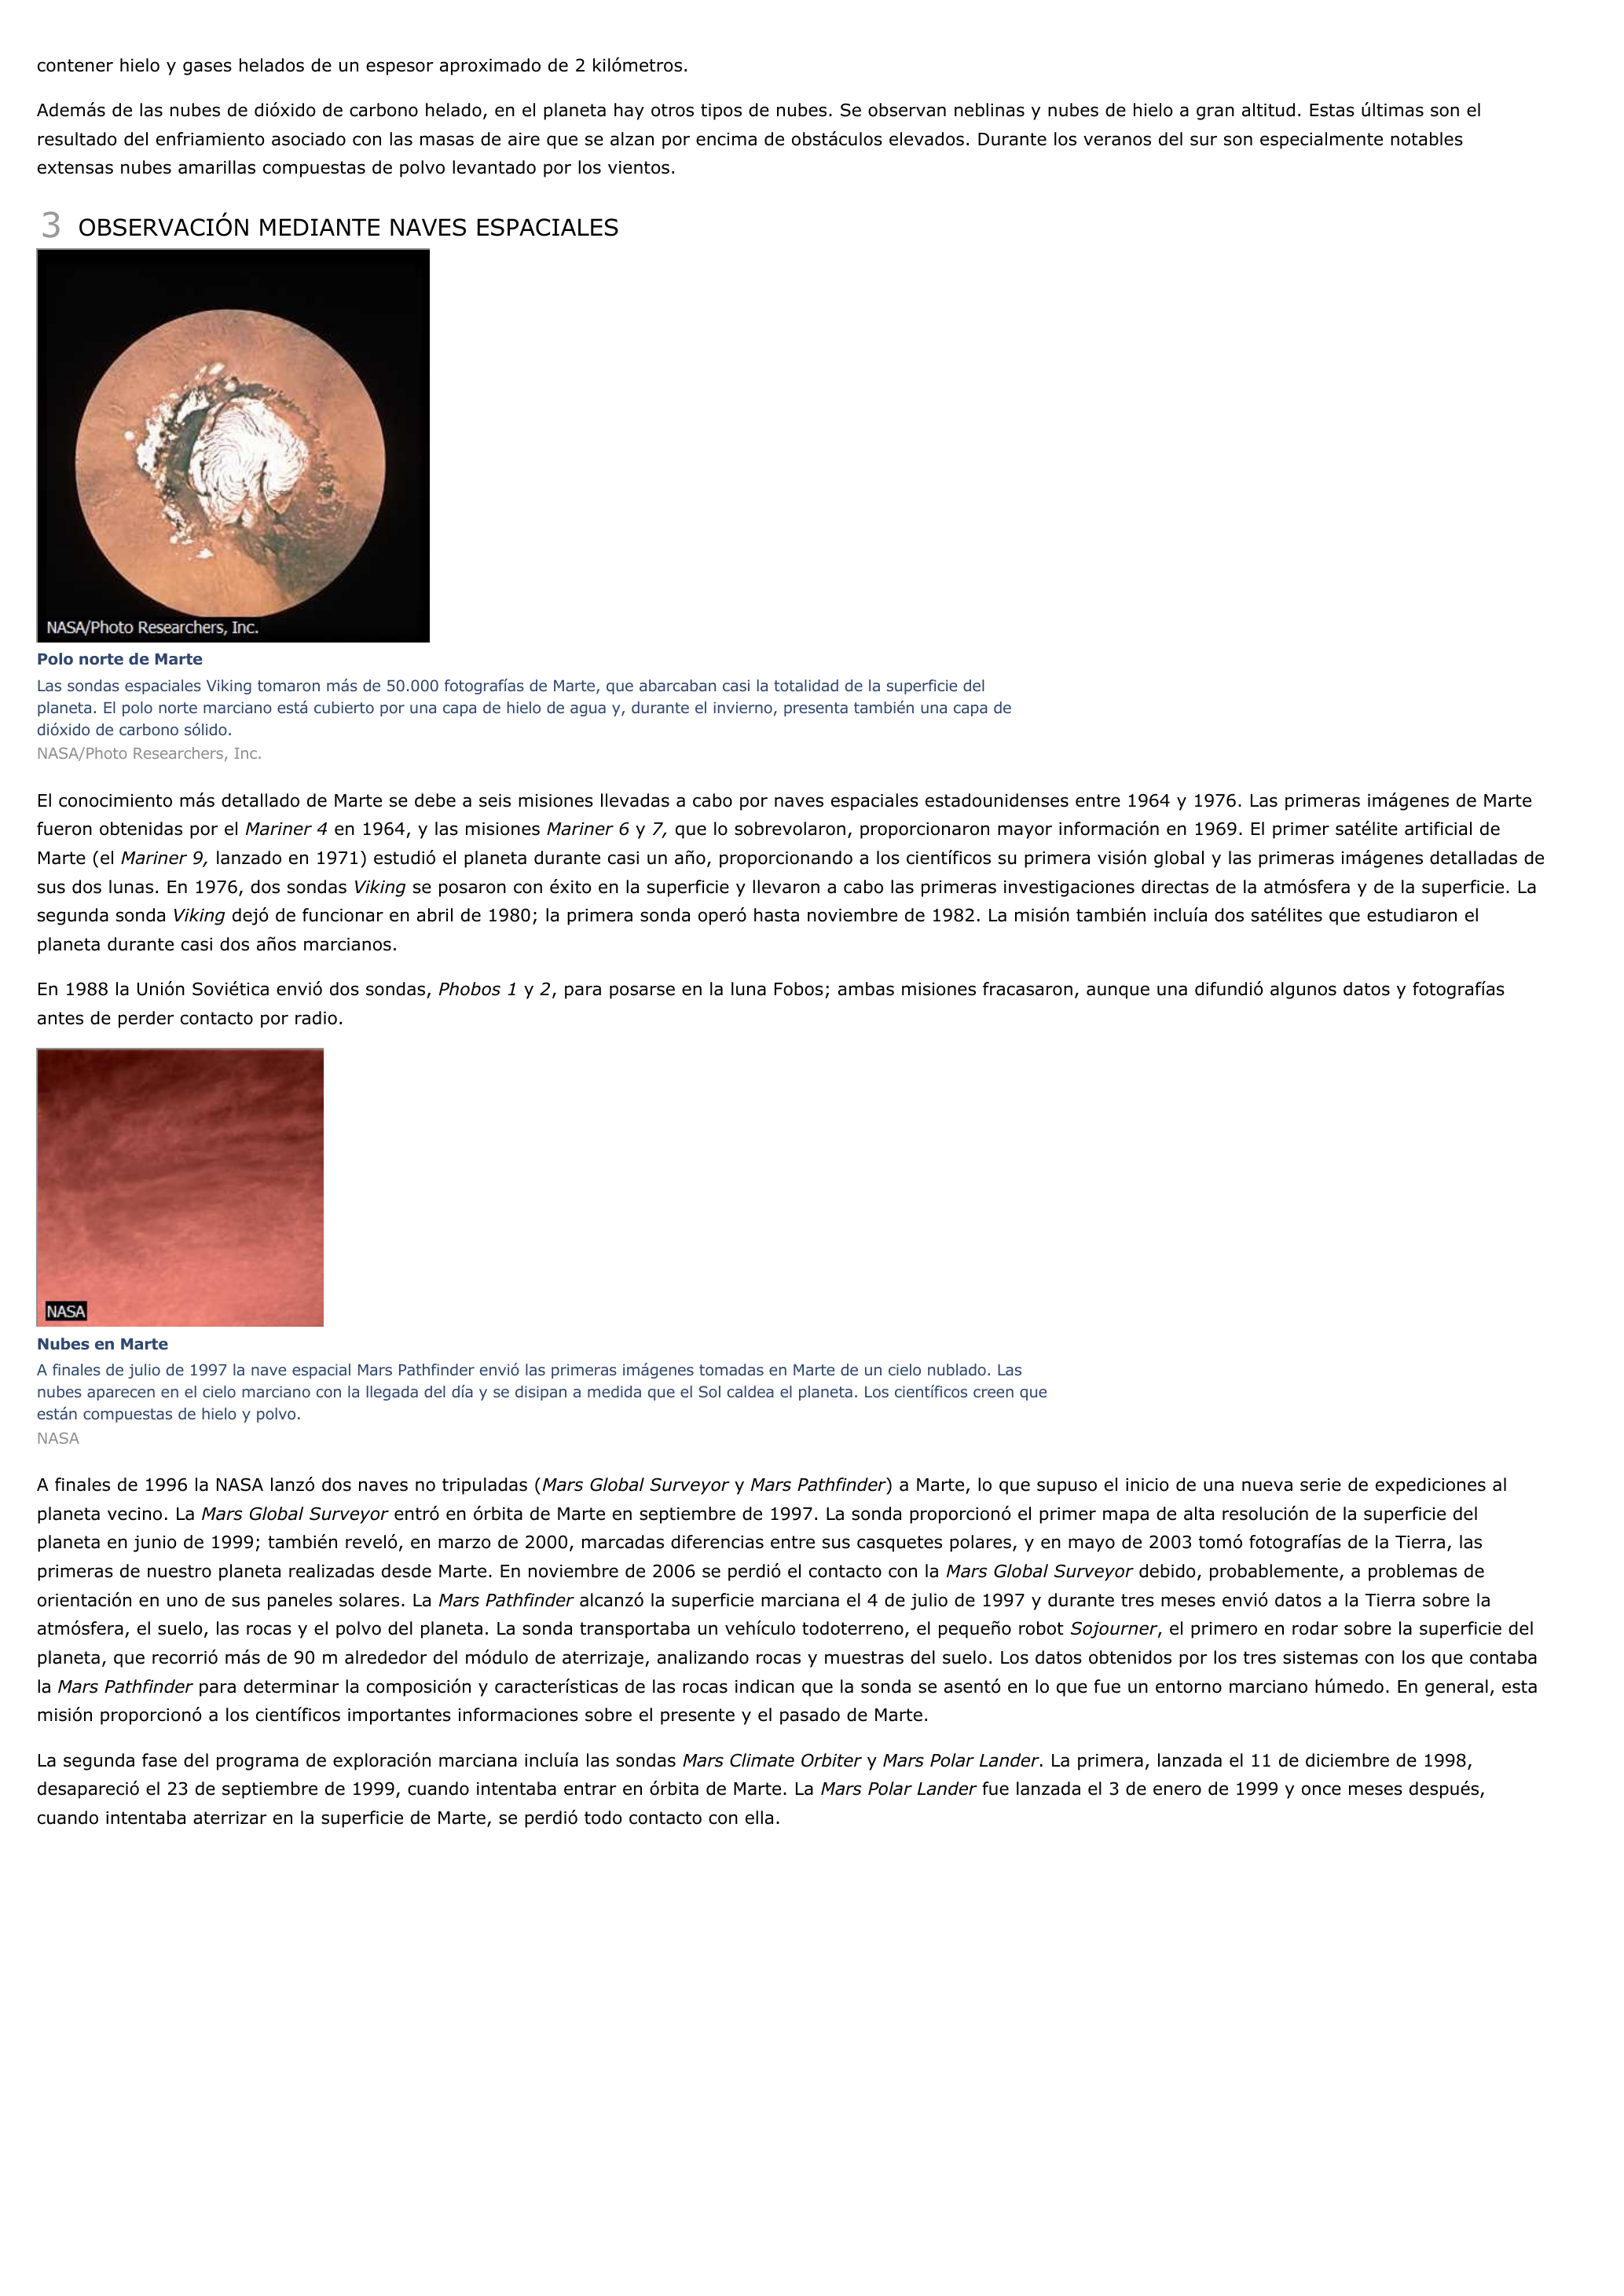 Prévisualisation du document Marte (planeta) - ciencia y tecnologia.